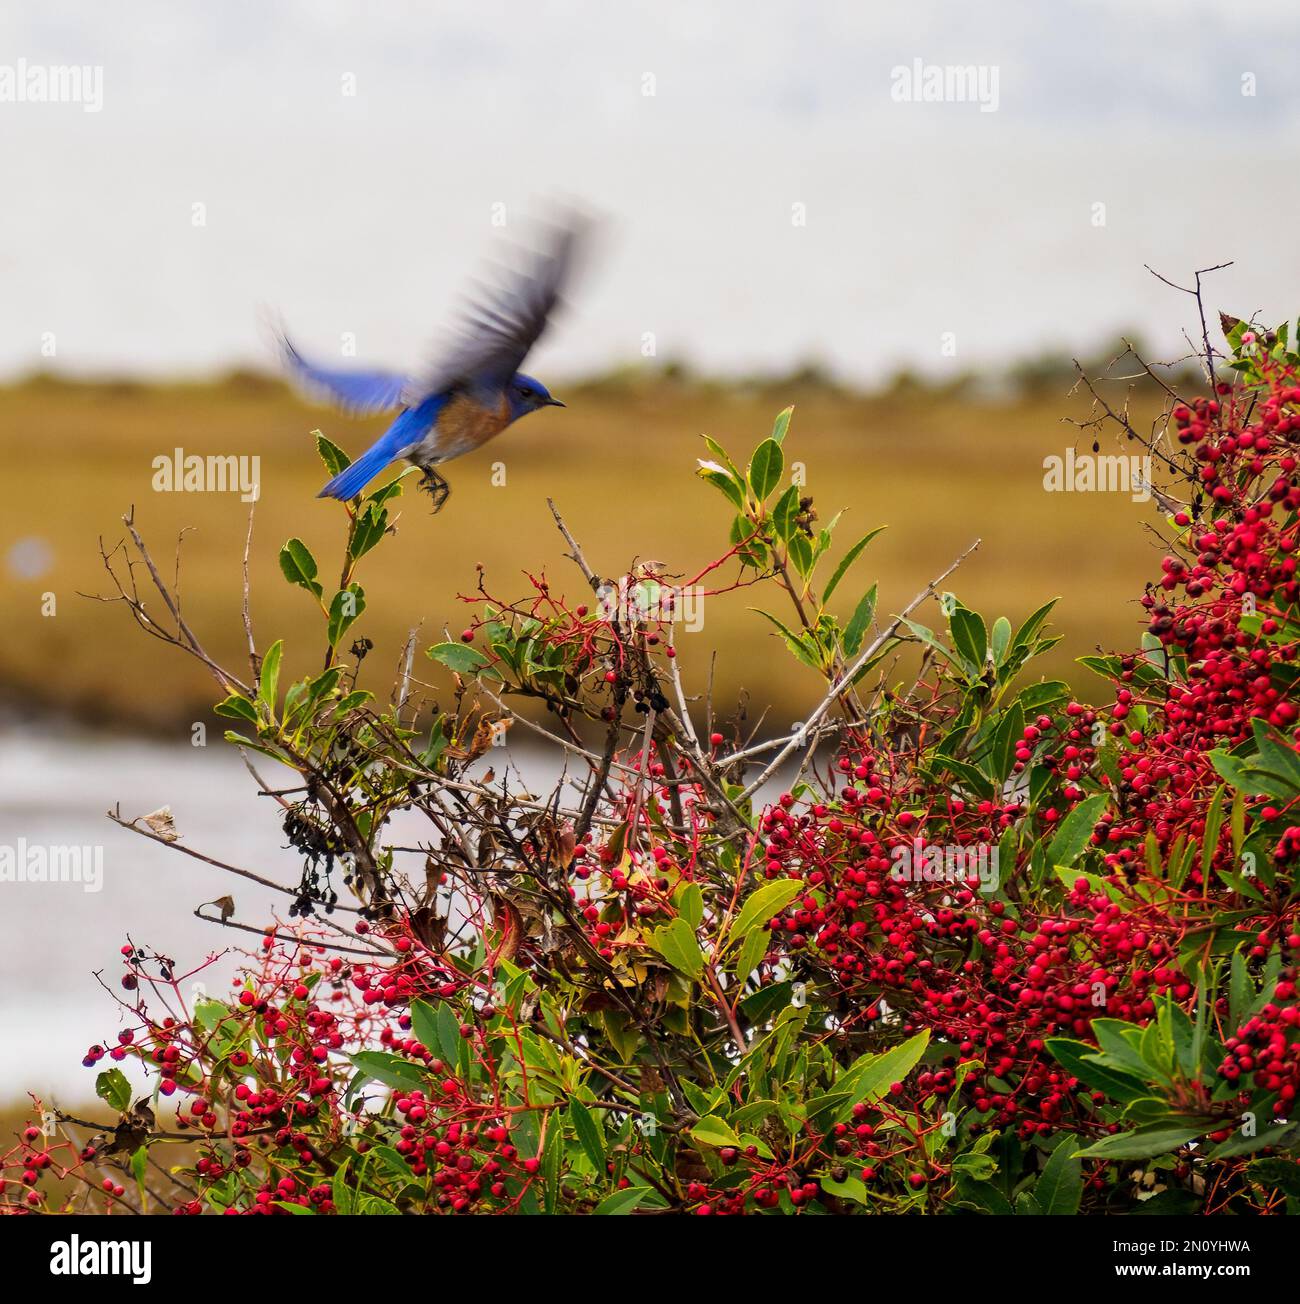 Bright blue bird in flight next to a red toyon berry bush Stock Photo